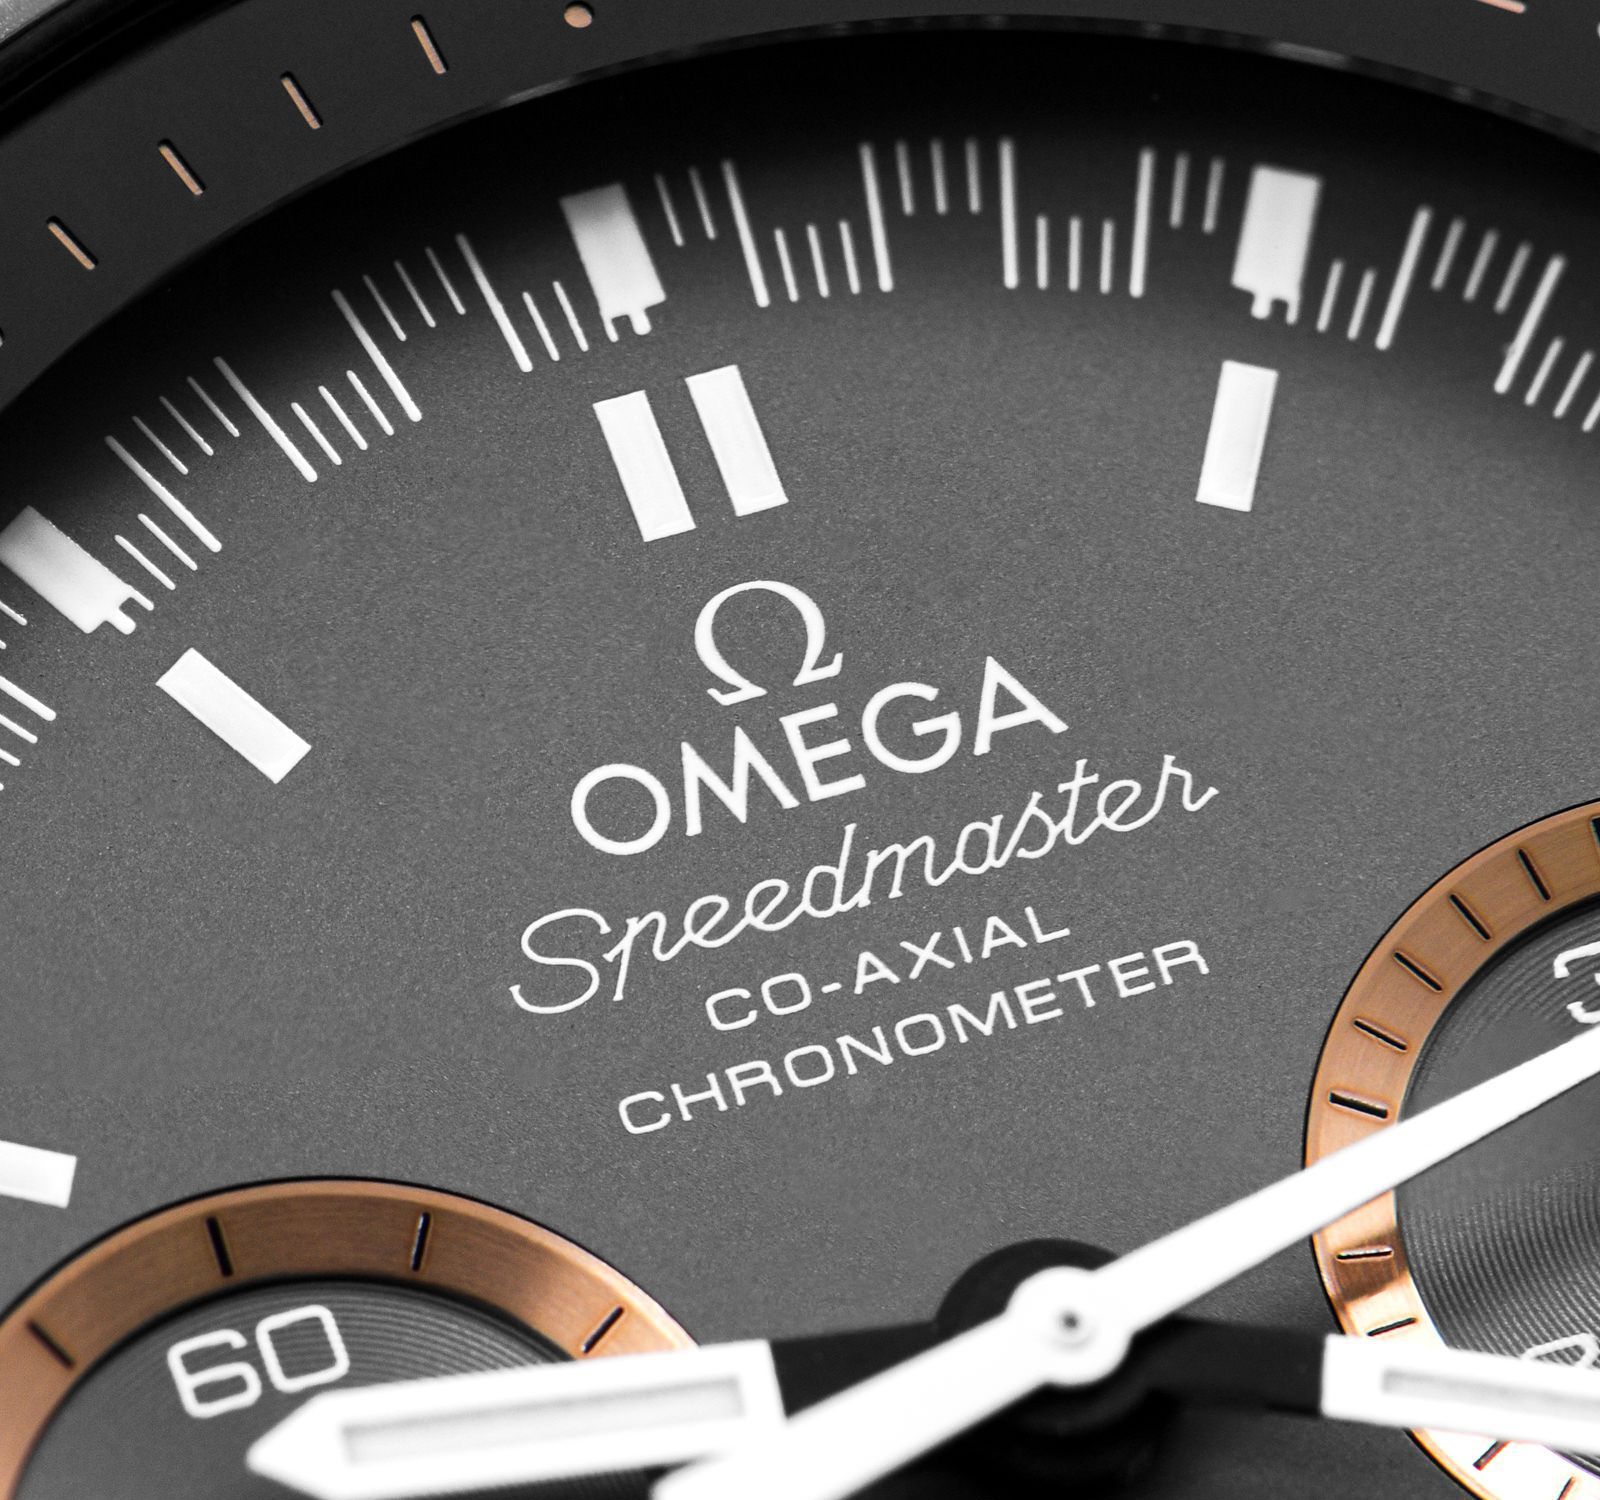 Pre-Owned Omega Speedmaster Price